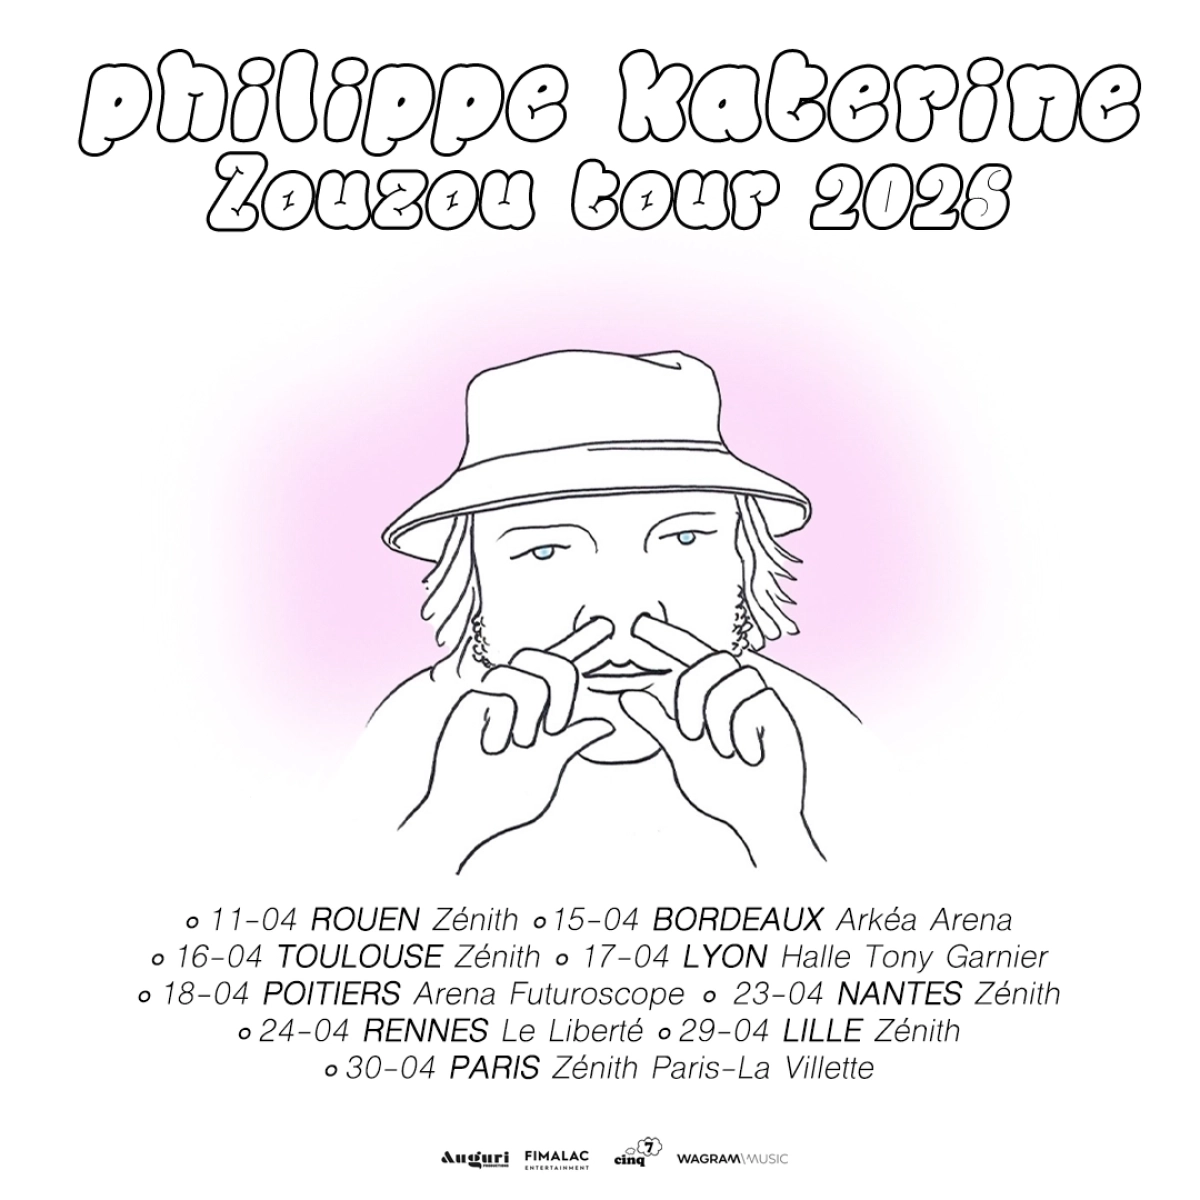 Philippe Katerine in der Arena Futuroscope Tickets